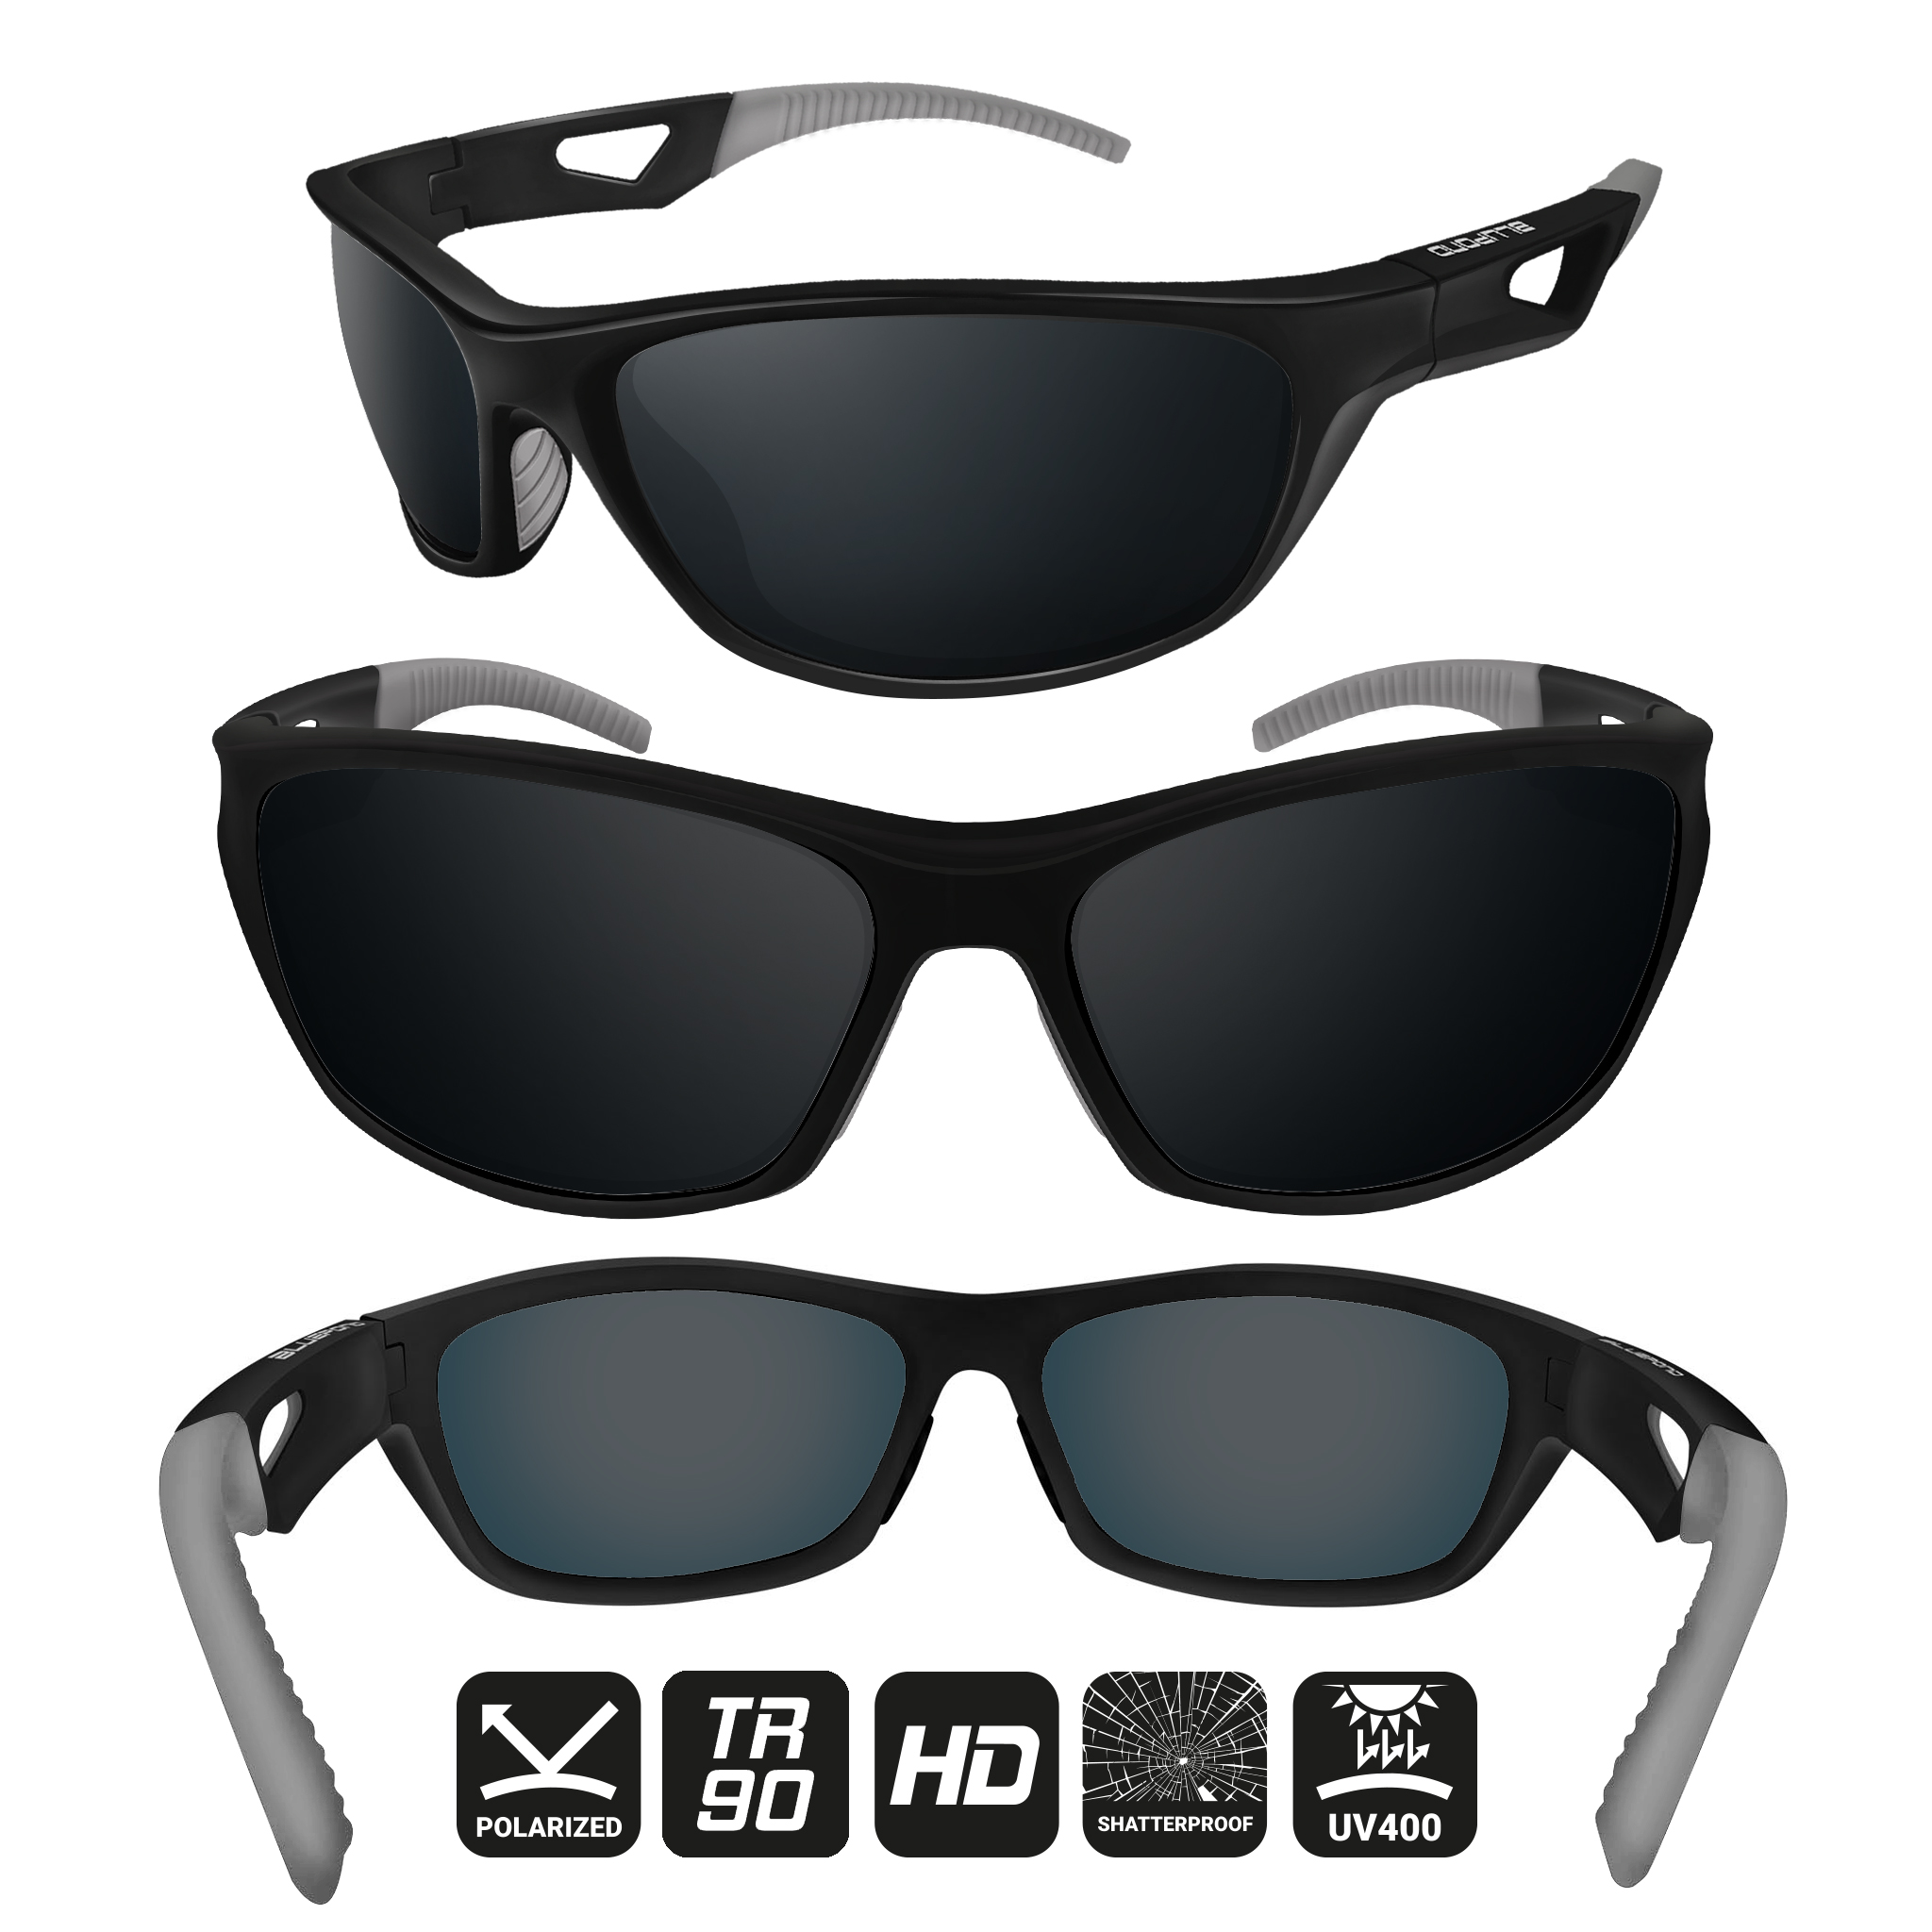 https://www.blupond.com/wp-content/uploads/2018/02/Sports-Sunglasses-Blupond-scout-black-3.jpg